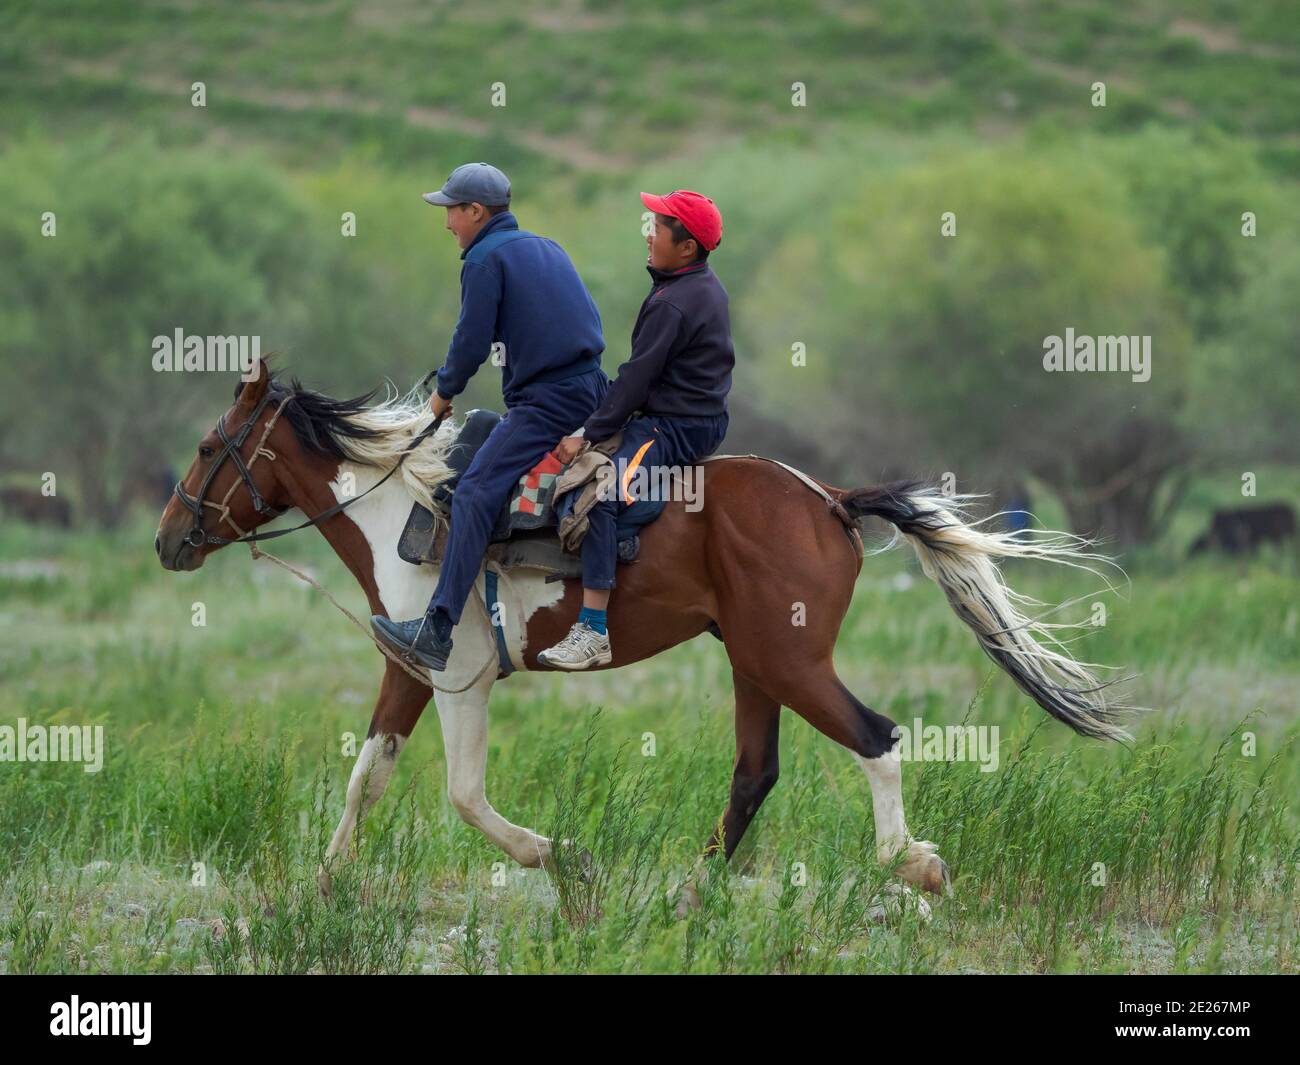 Spectators arriving by horse.  Folk Festival commemorating the origin myth the Tien Shan Maral (Tian Shan wapiti), an origin myth of the Kyrgyz tribes Stock Photo